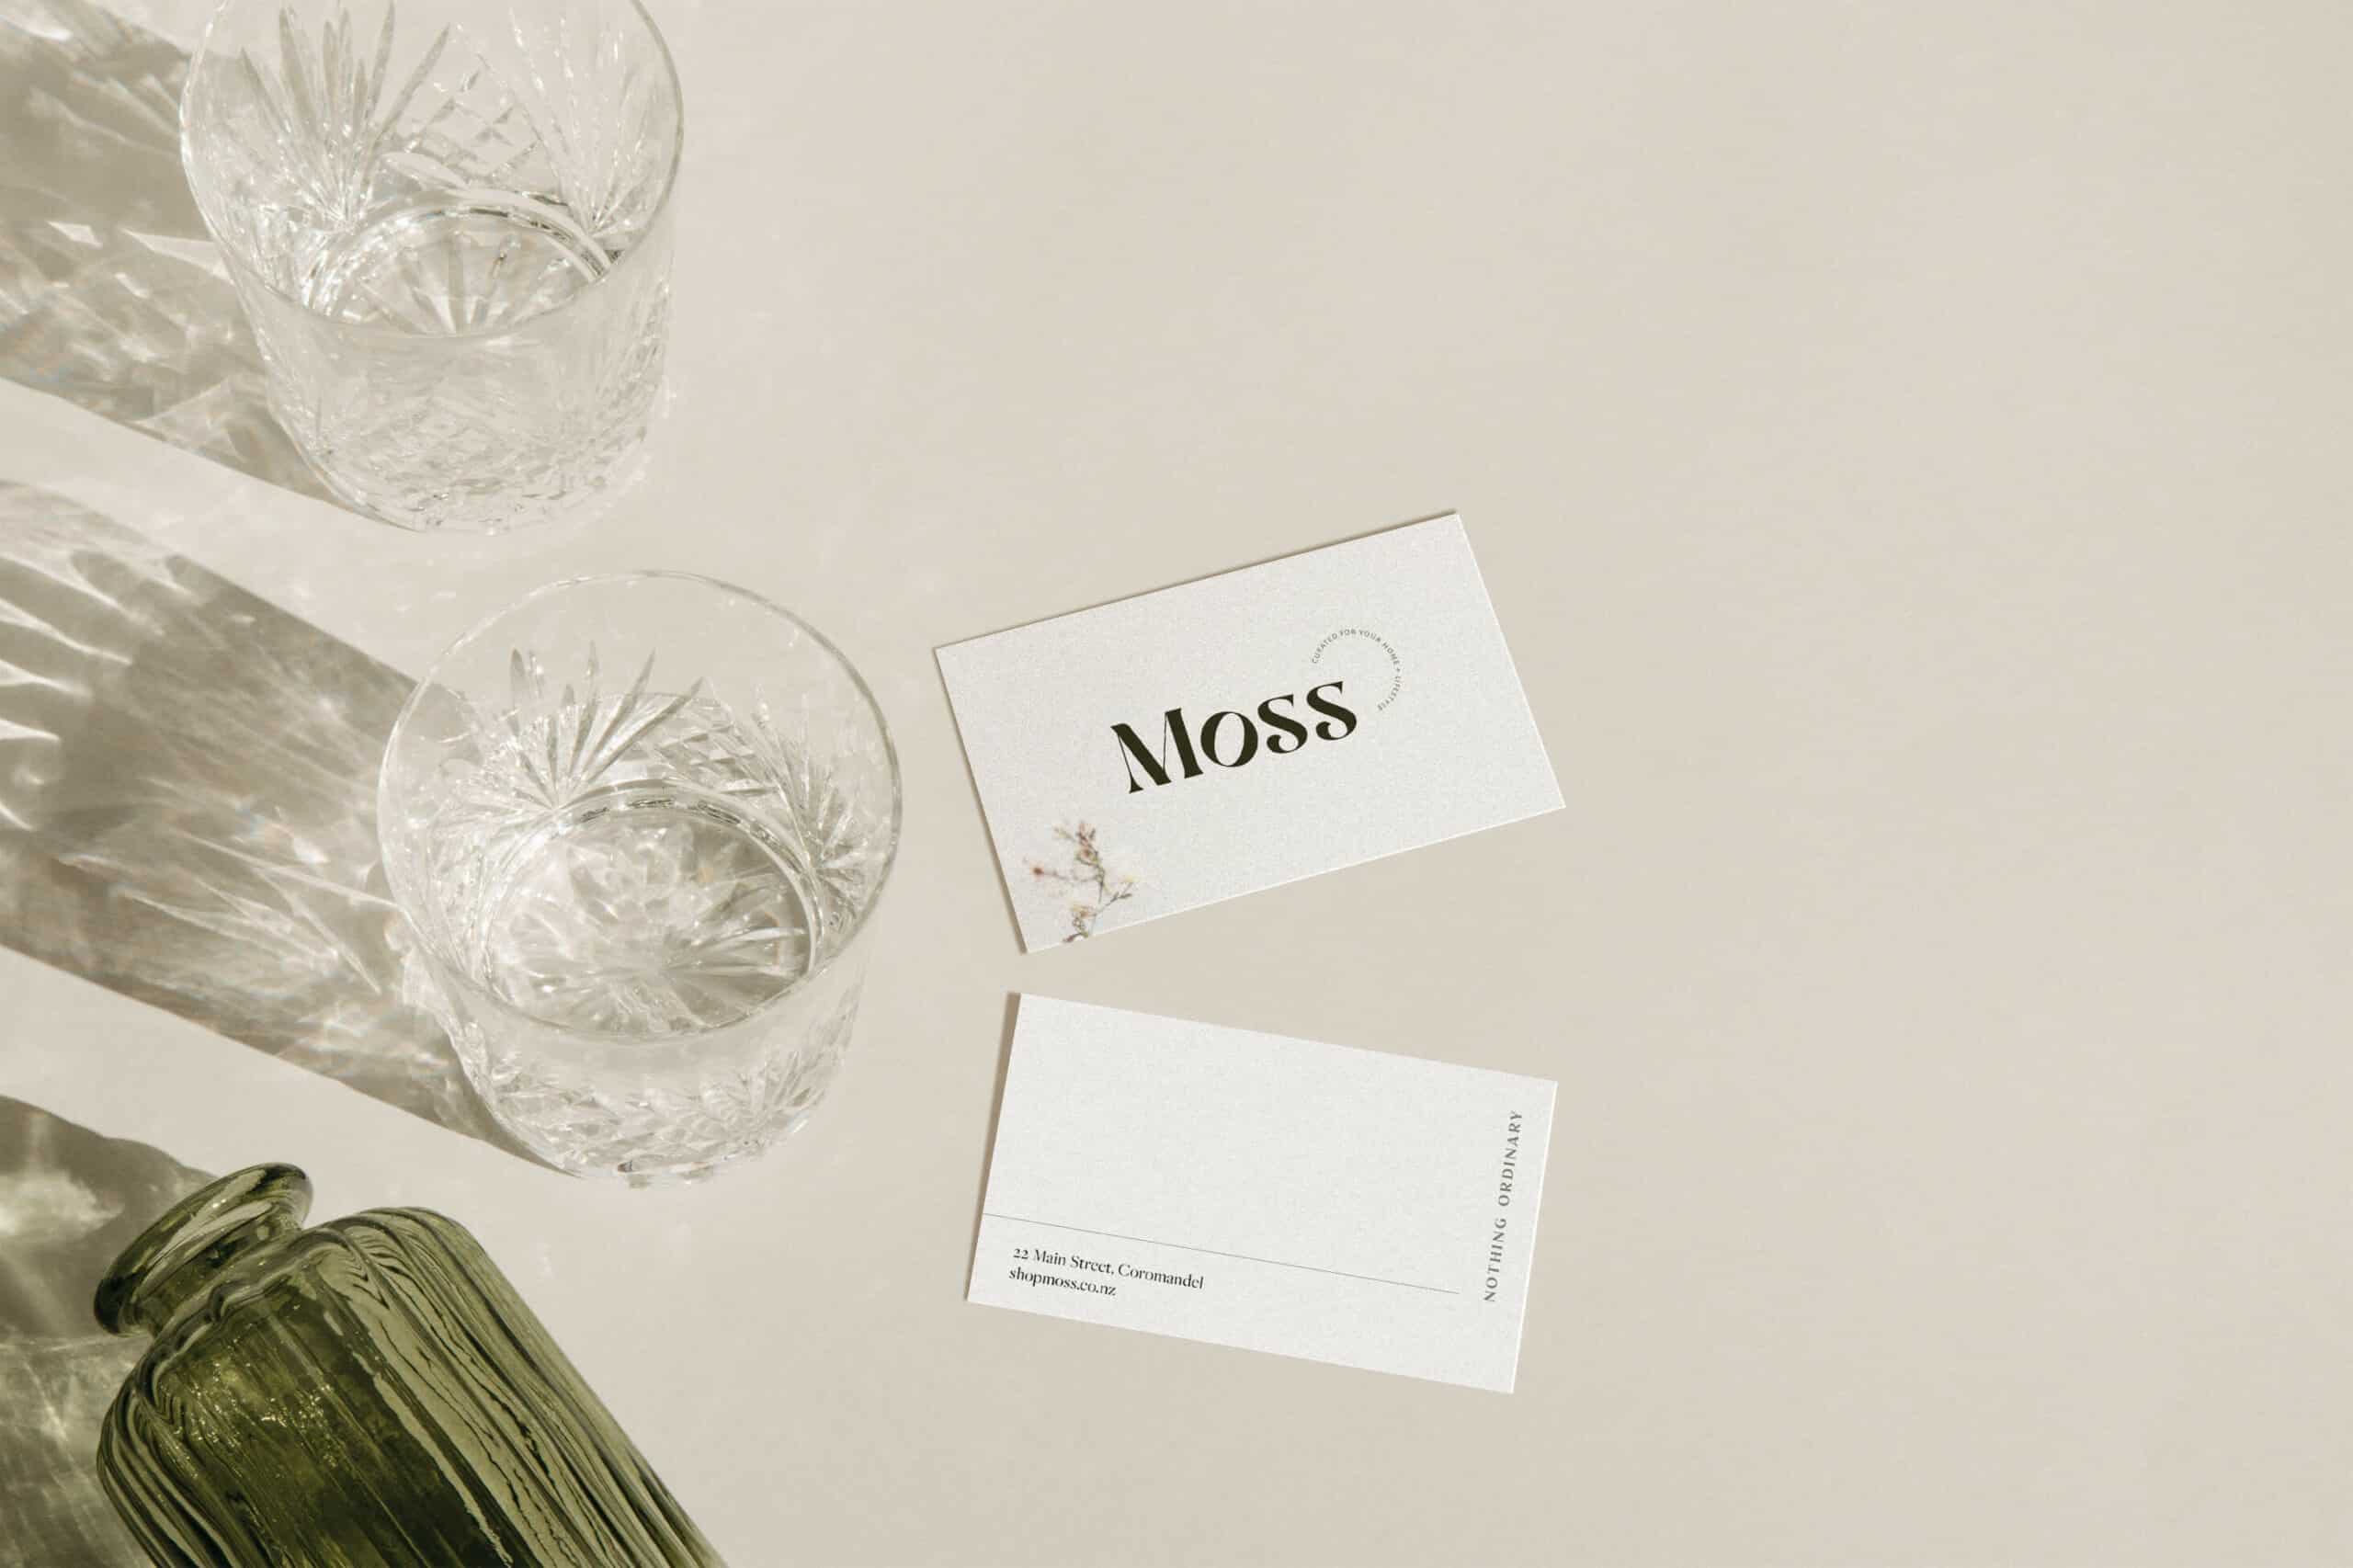 moss business card mockup 2 copy